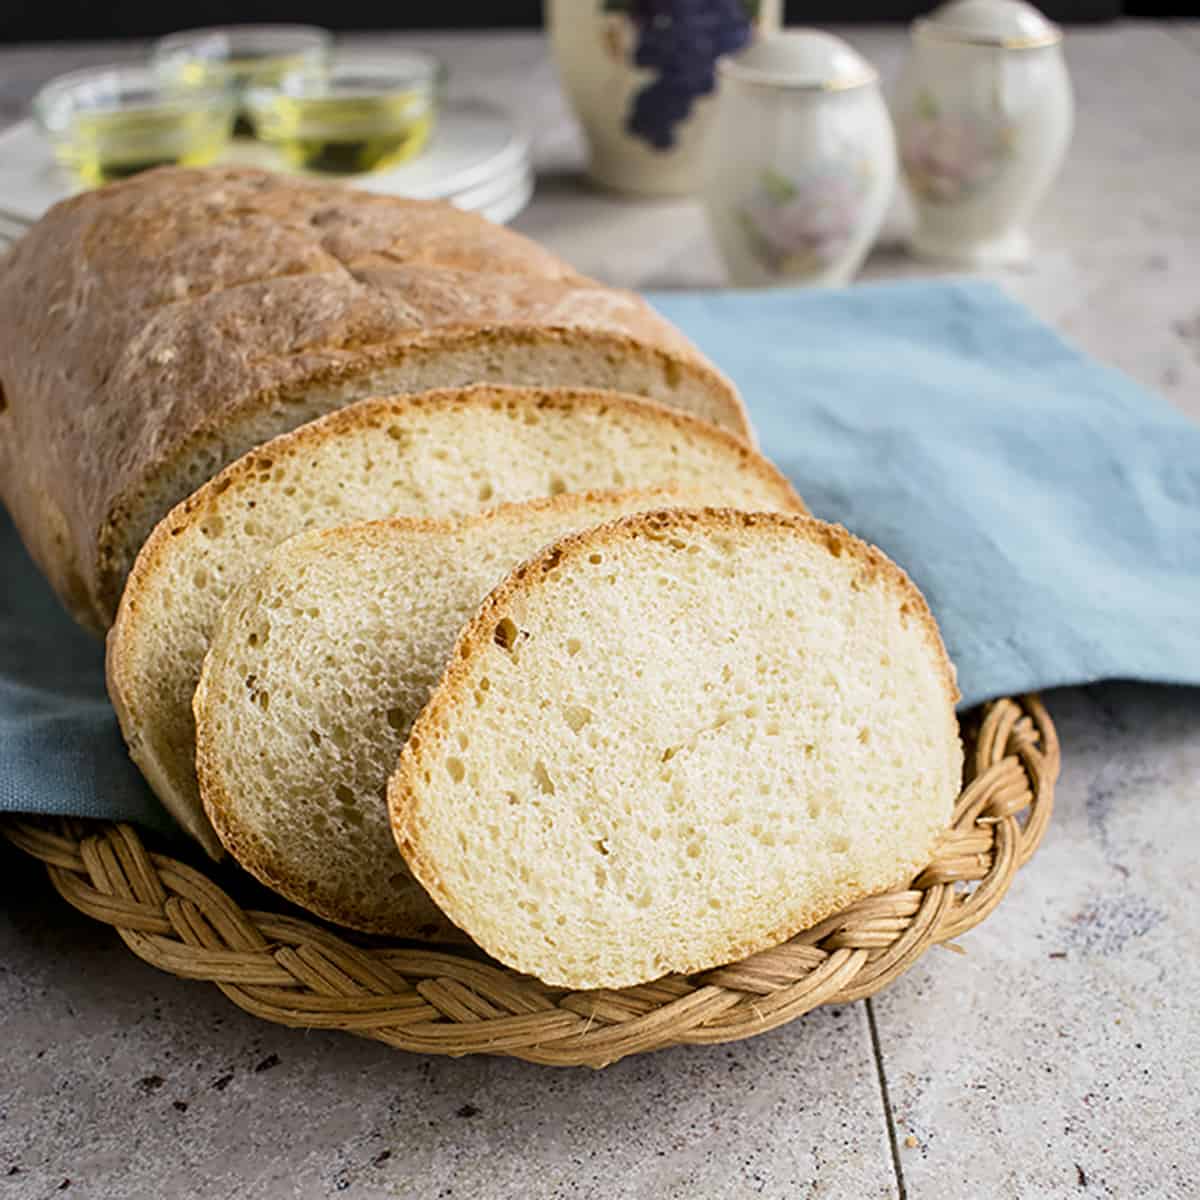 https://cookingwithmammac.com/wp-content/uploads/2020/05/1200-Homemade-Italian-Bread-Image-2.jpg